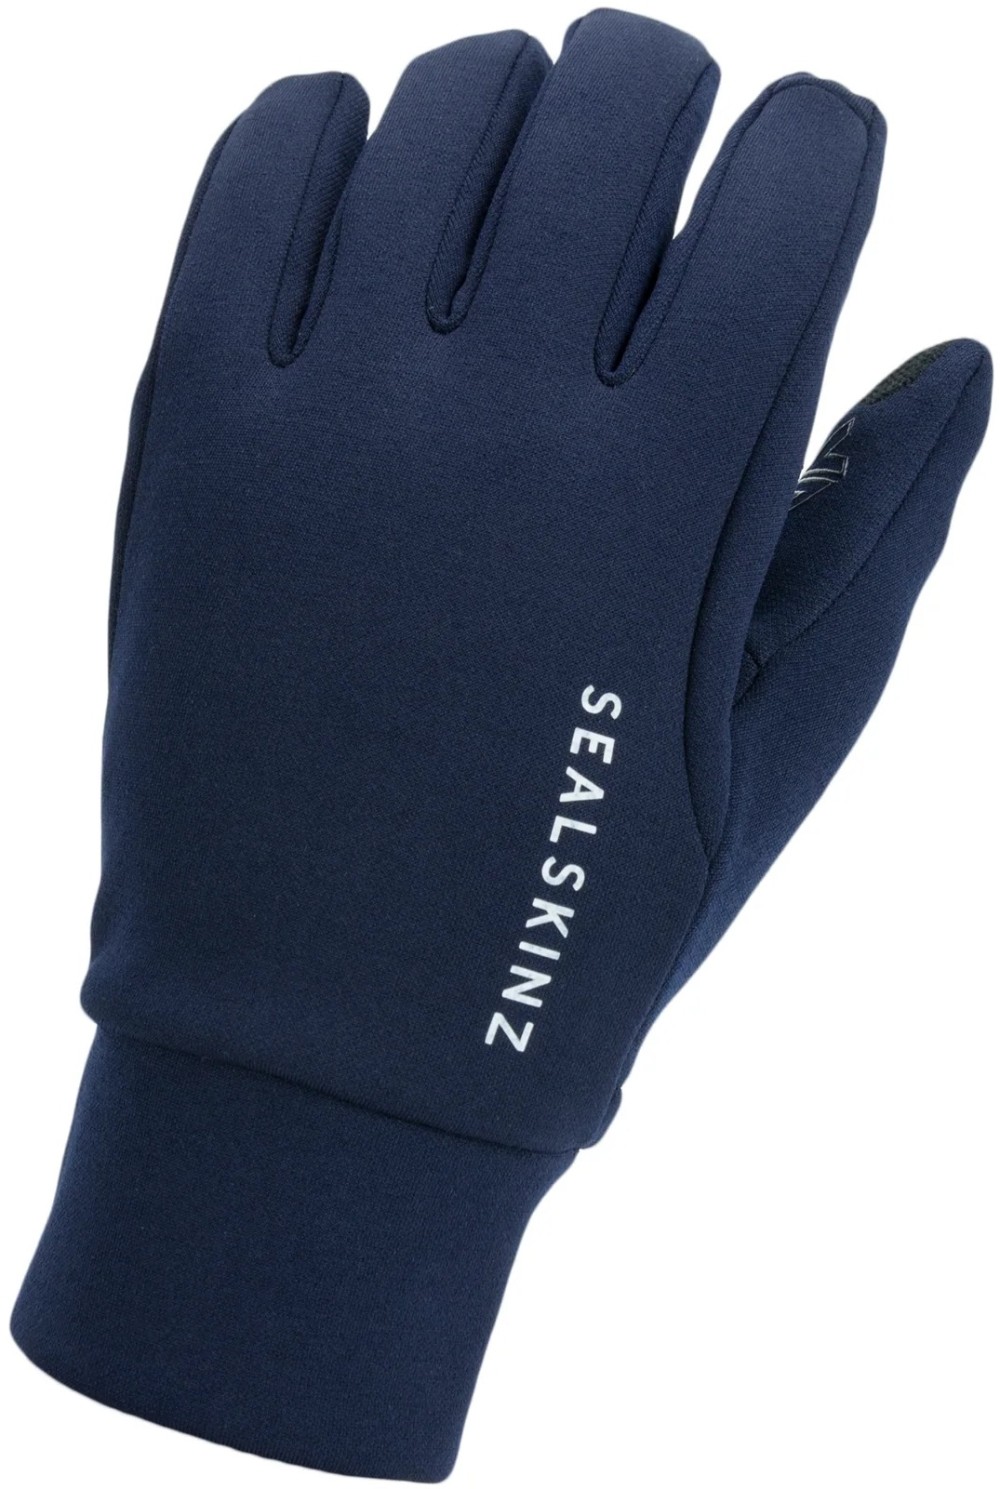 Tasburgh Water Repellent All Weather Long Finger Gloves image 0